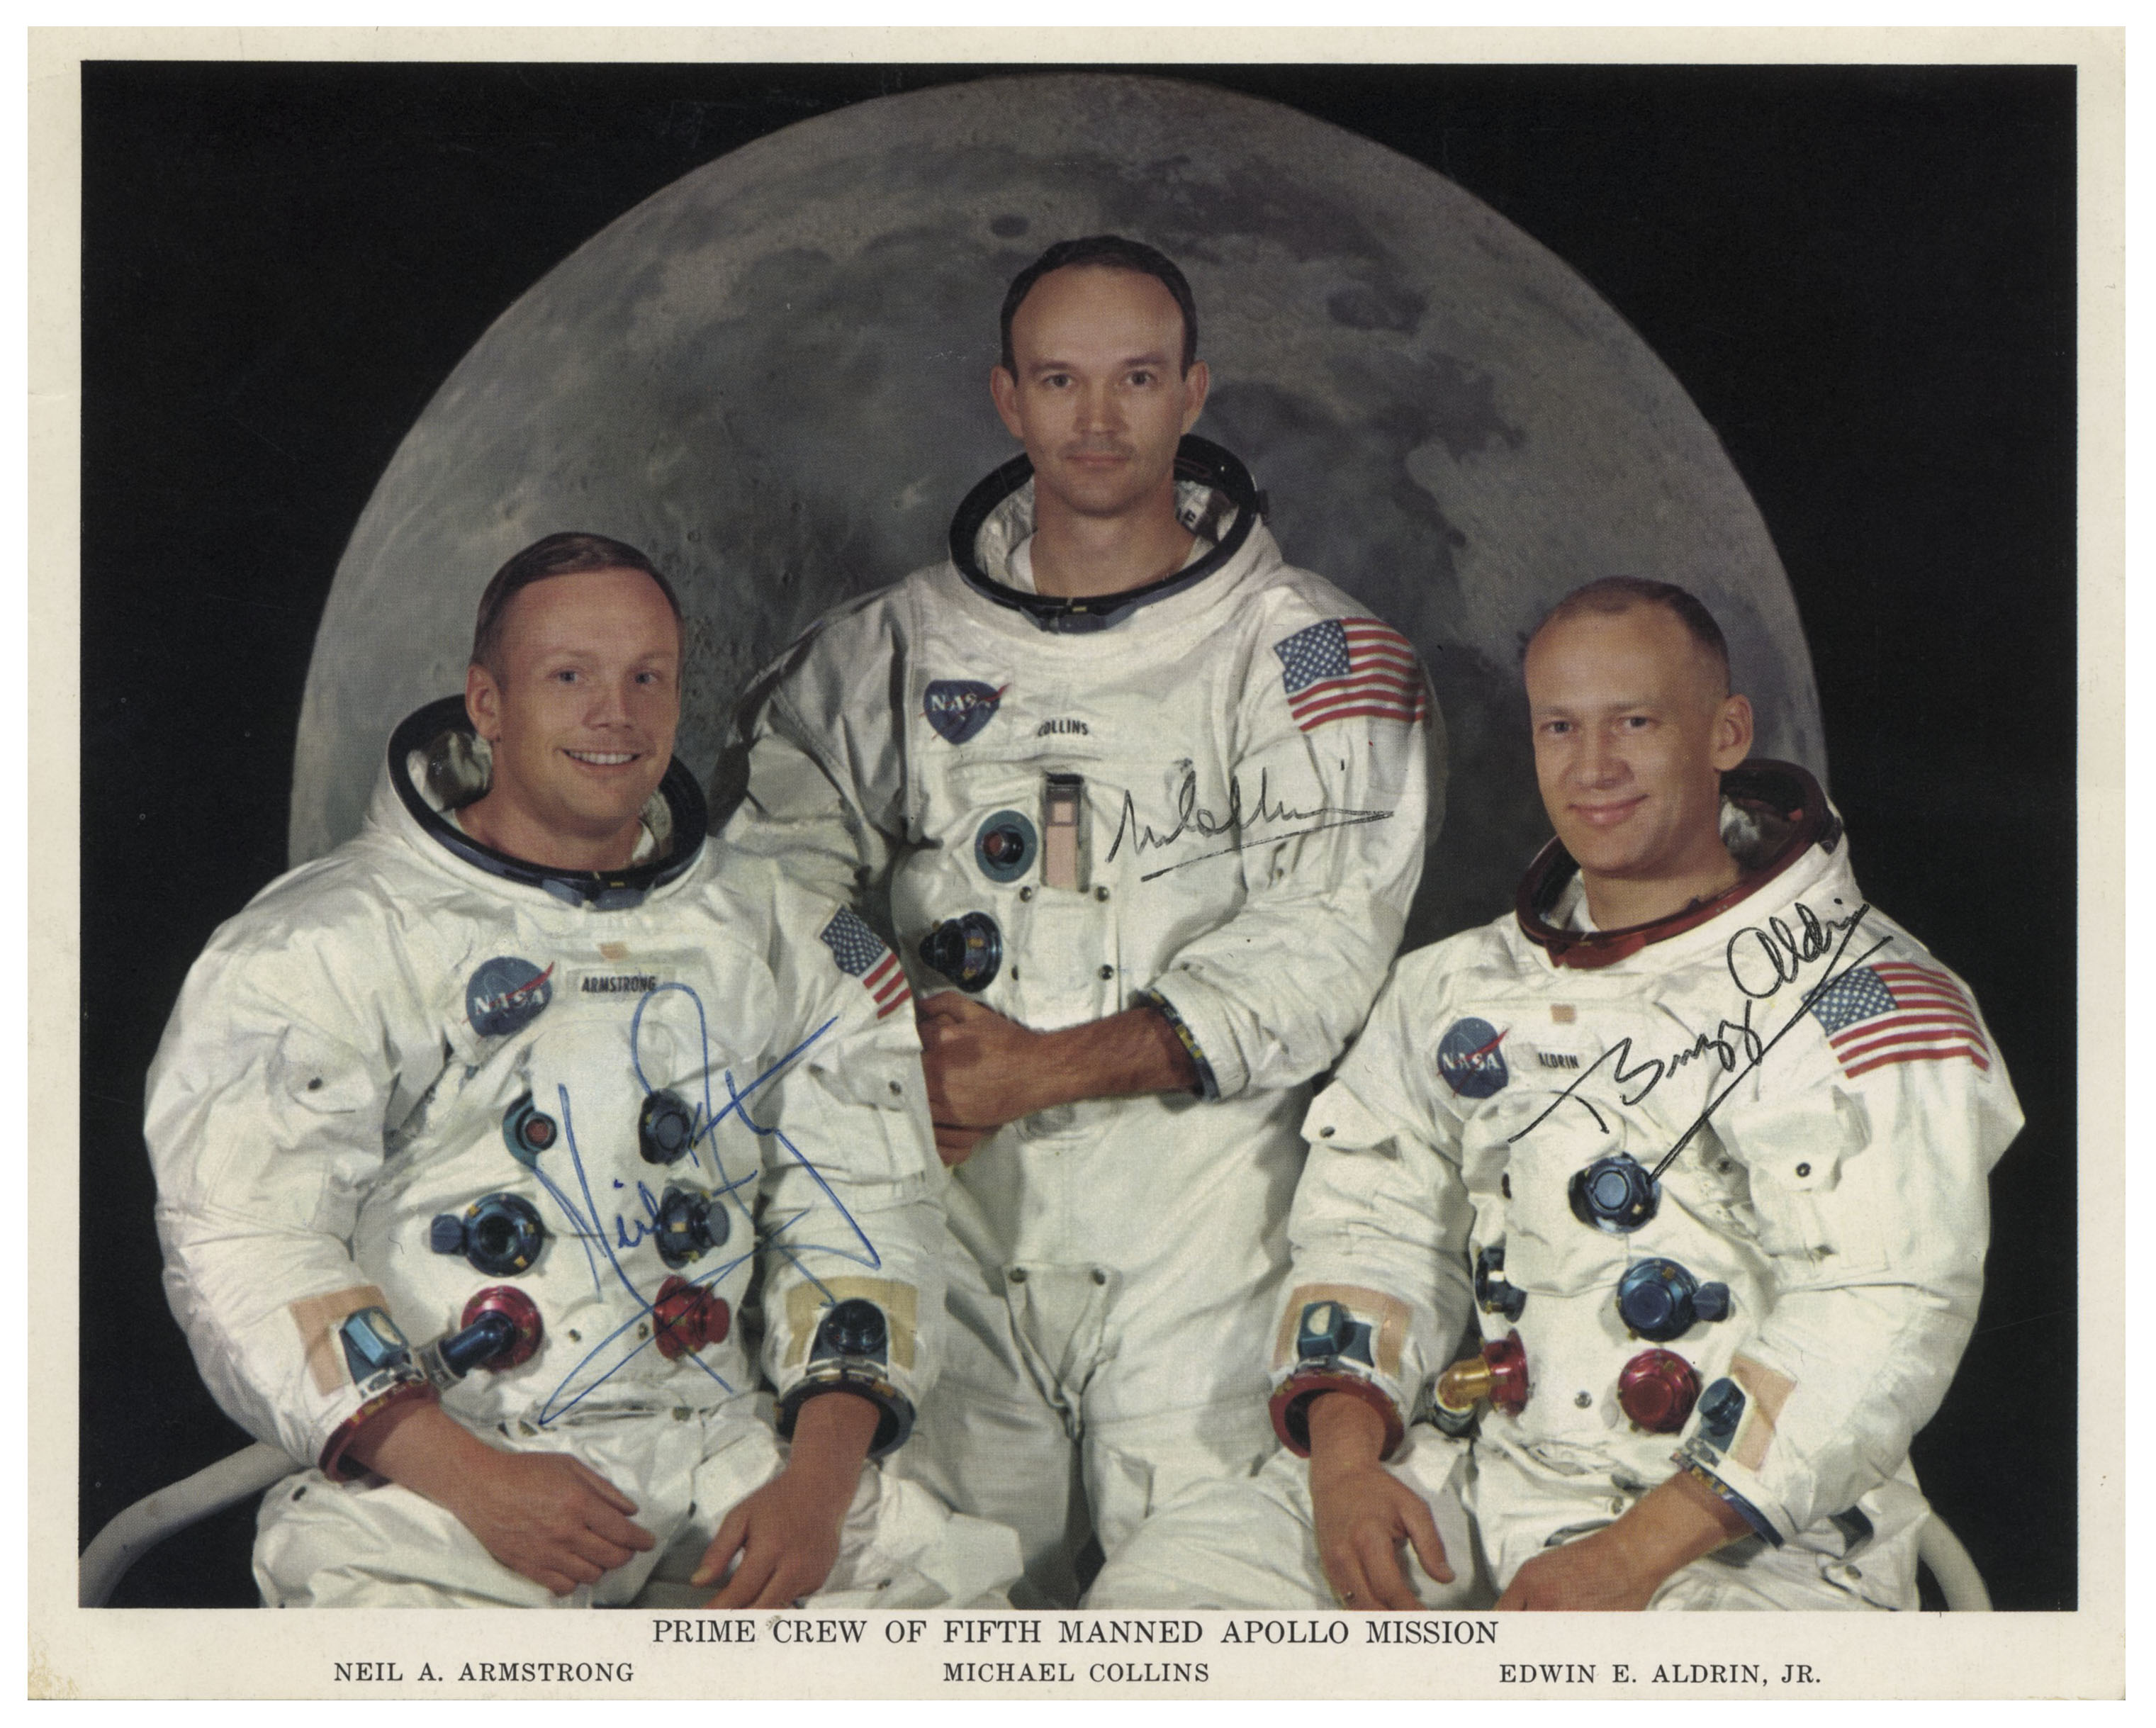 Apollo 11 crew-signed NASA photo. Astronauts Neil Armstrong, Michael Collins and Buzz Aldrin each